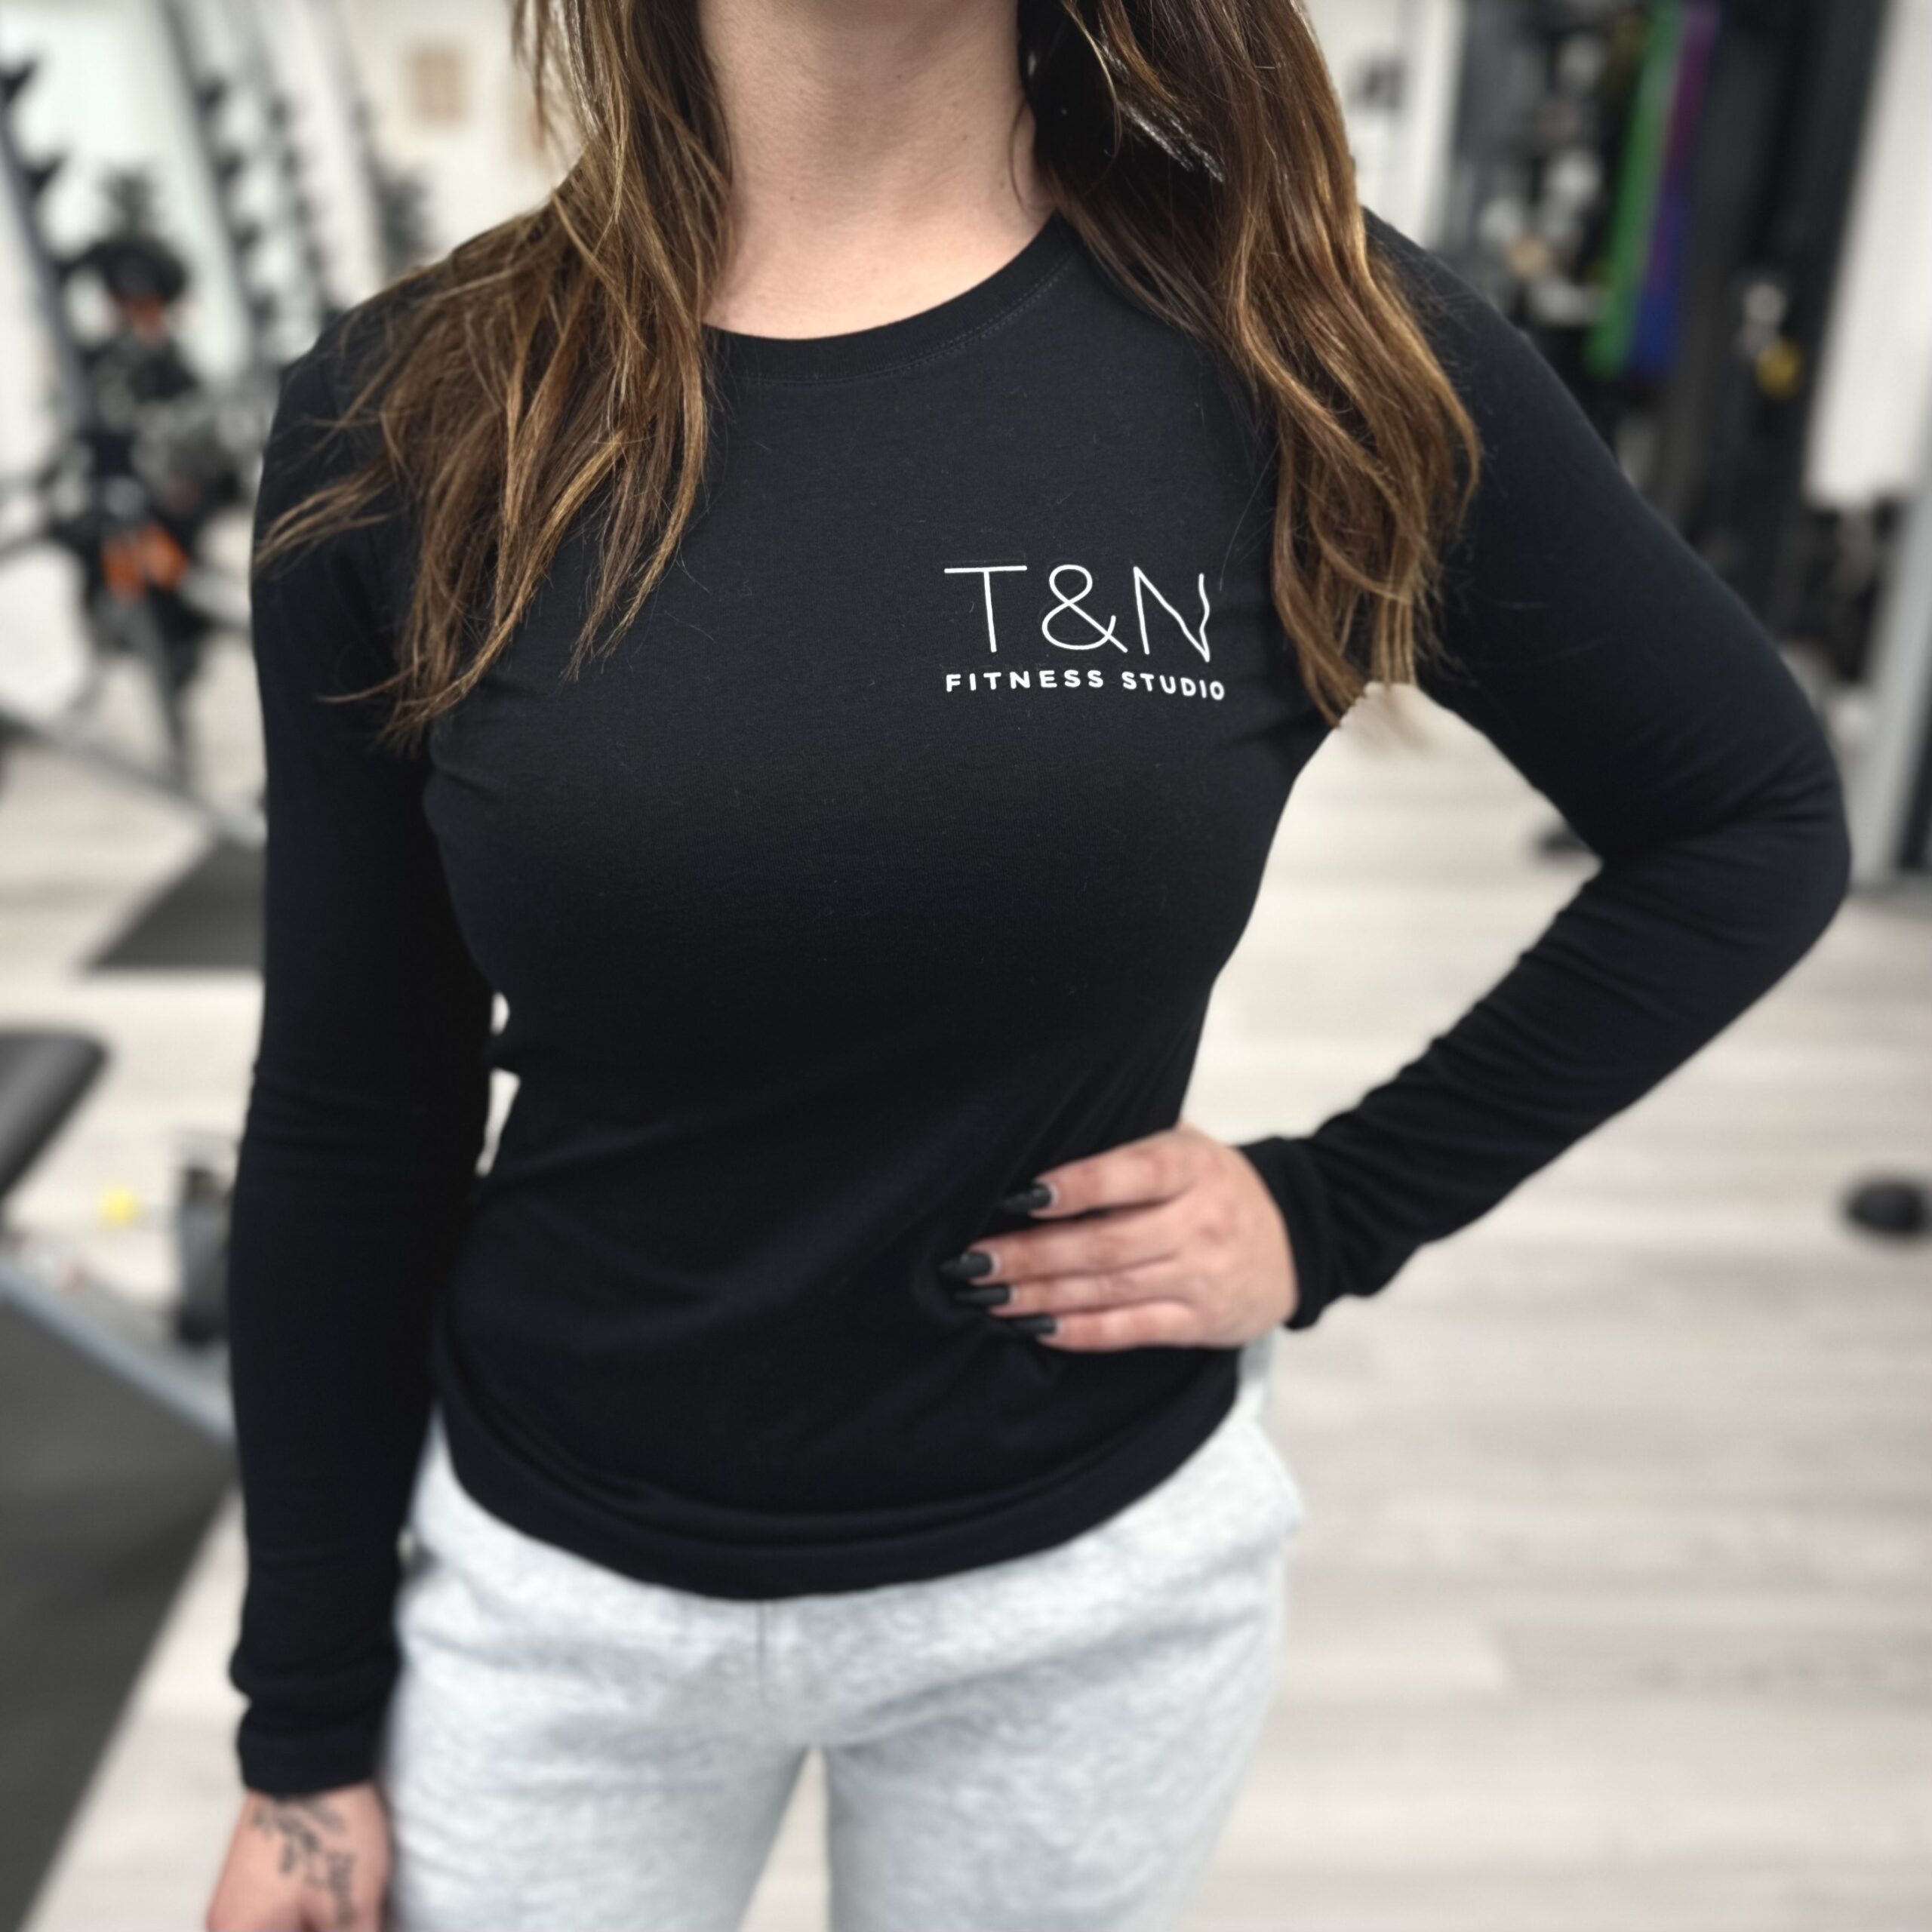 Merchandise: Tnn women's long sleeve tee.